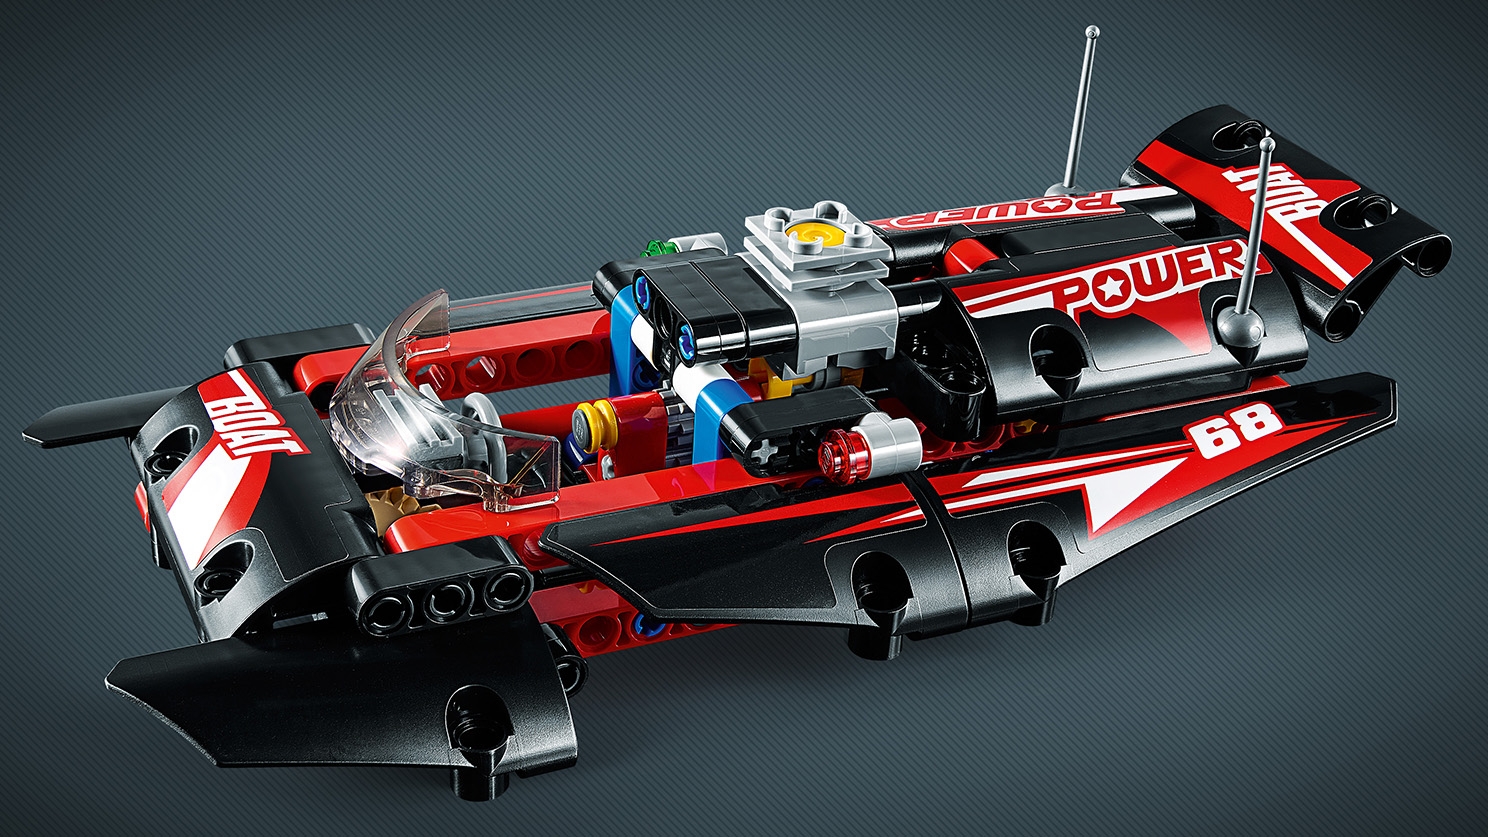 Power Boat - LEGO® Technic Sets - LEGO.com for